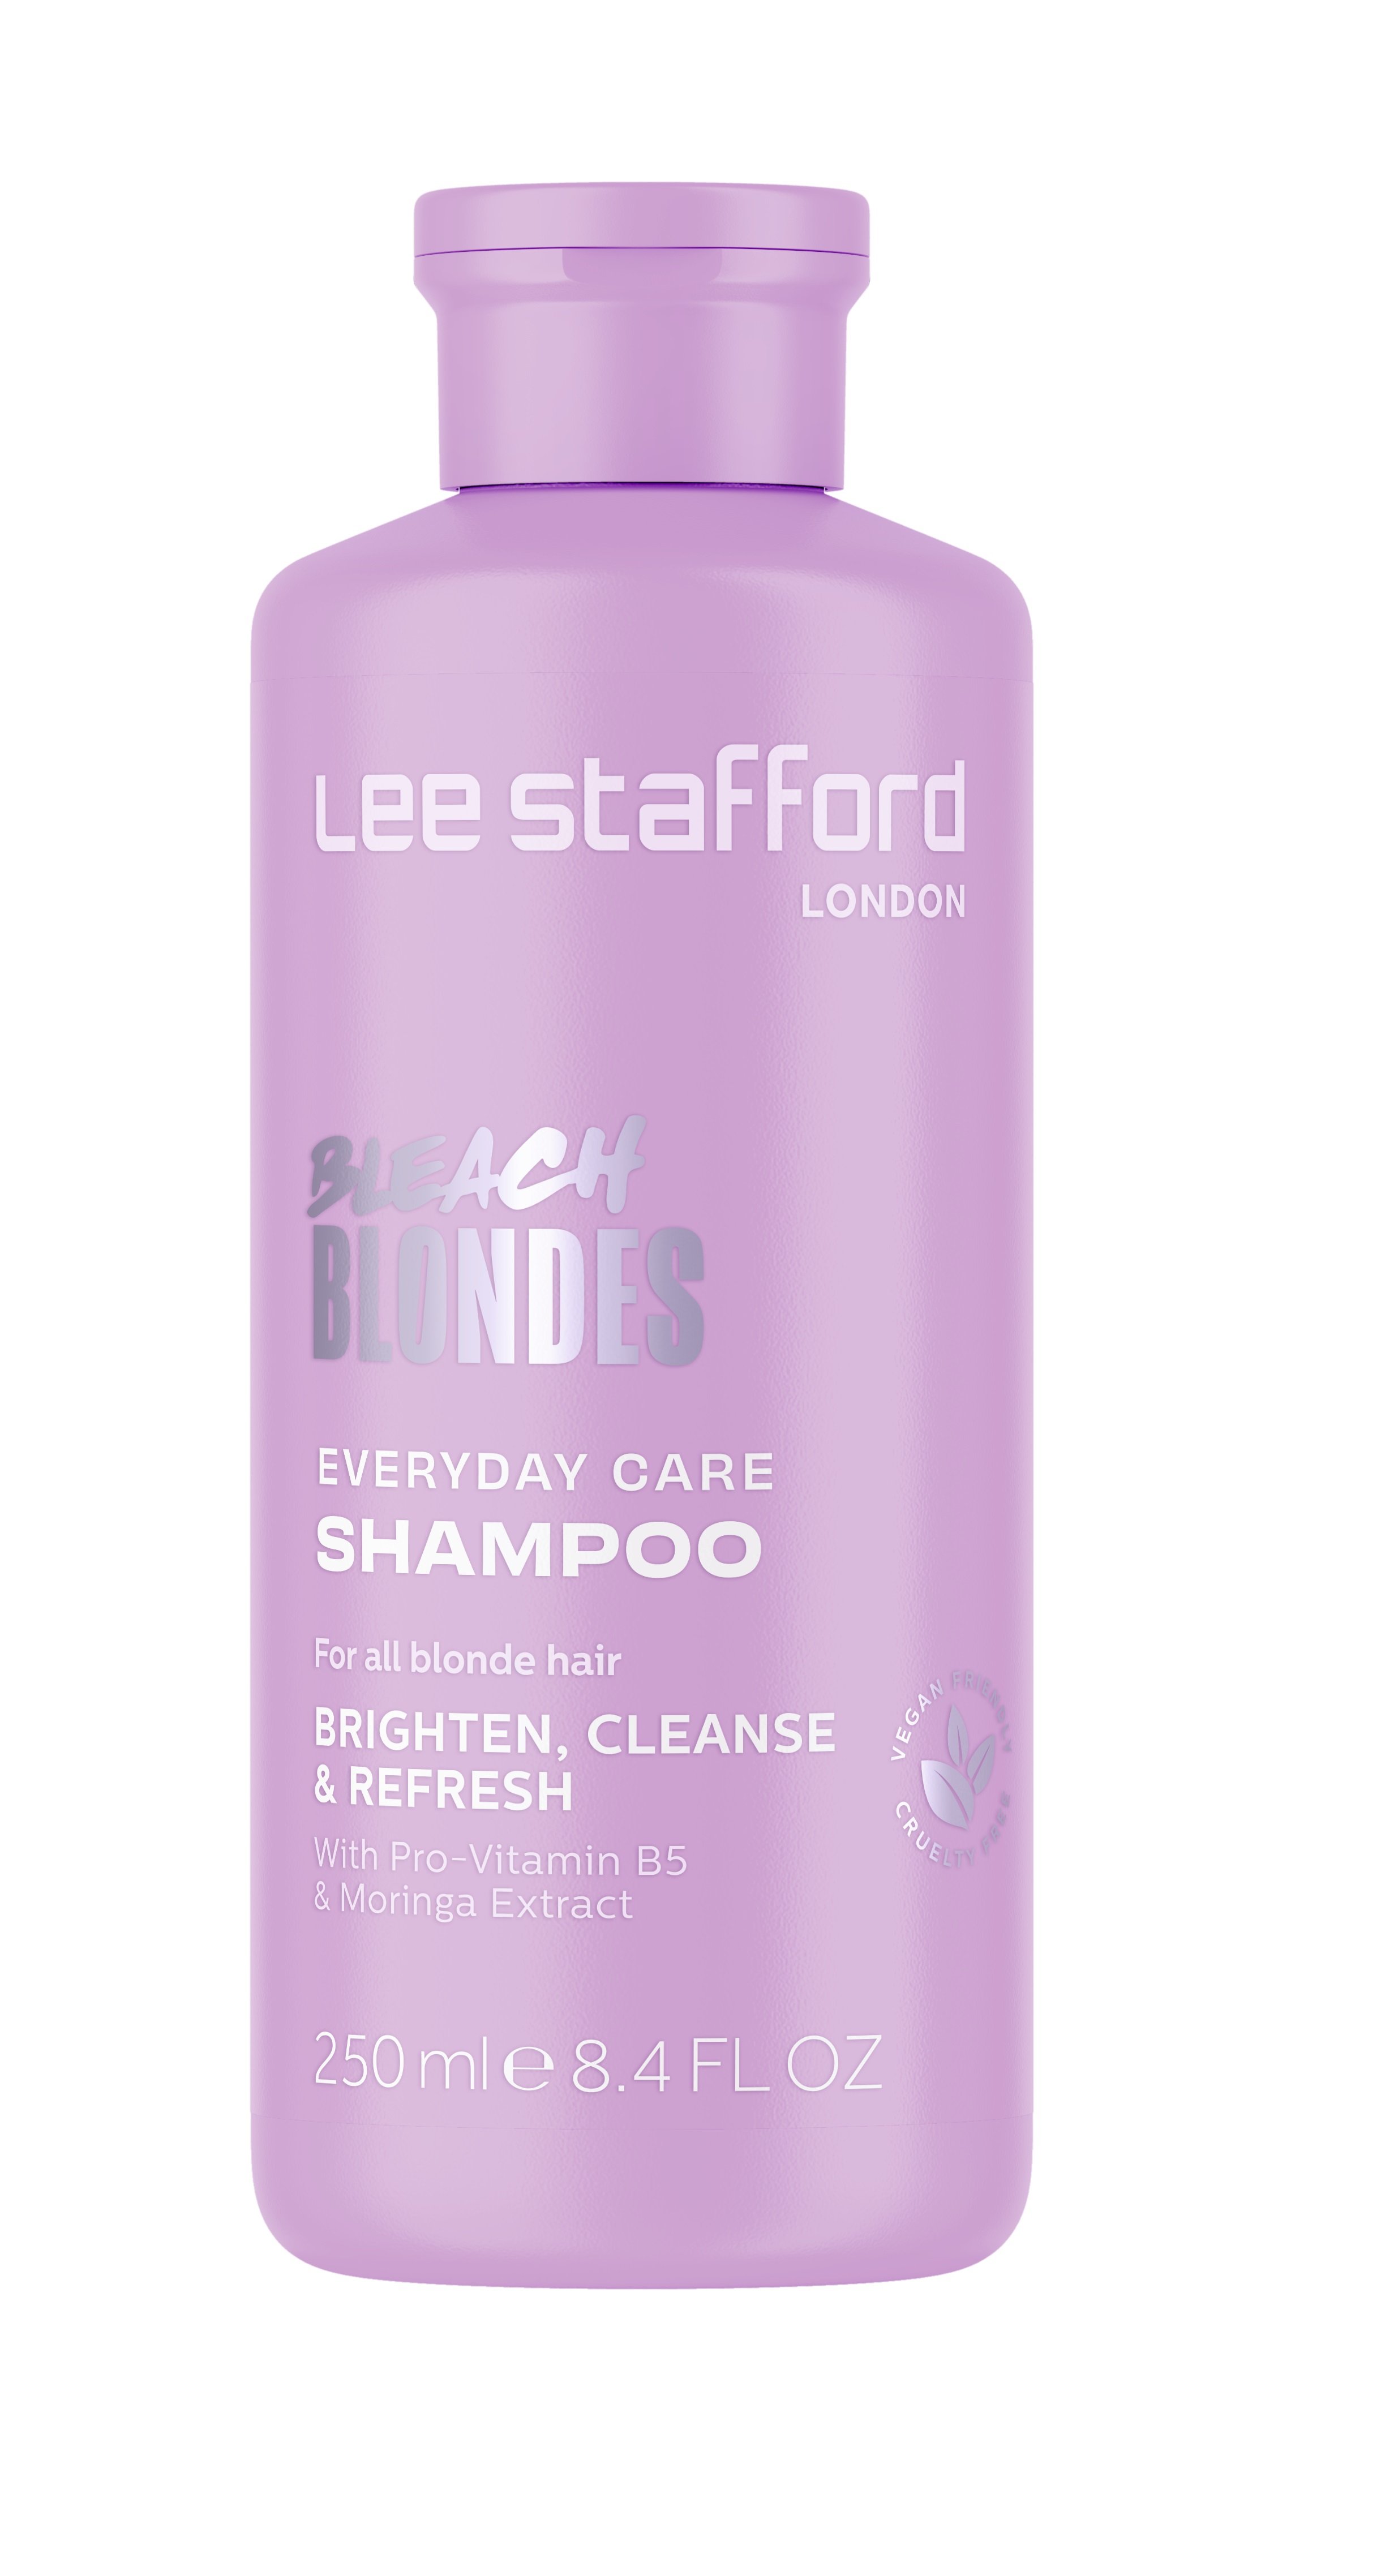 Lee Stafford - Bleach Blondes Everyday Care Shampoo 250 ml